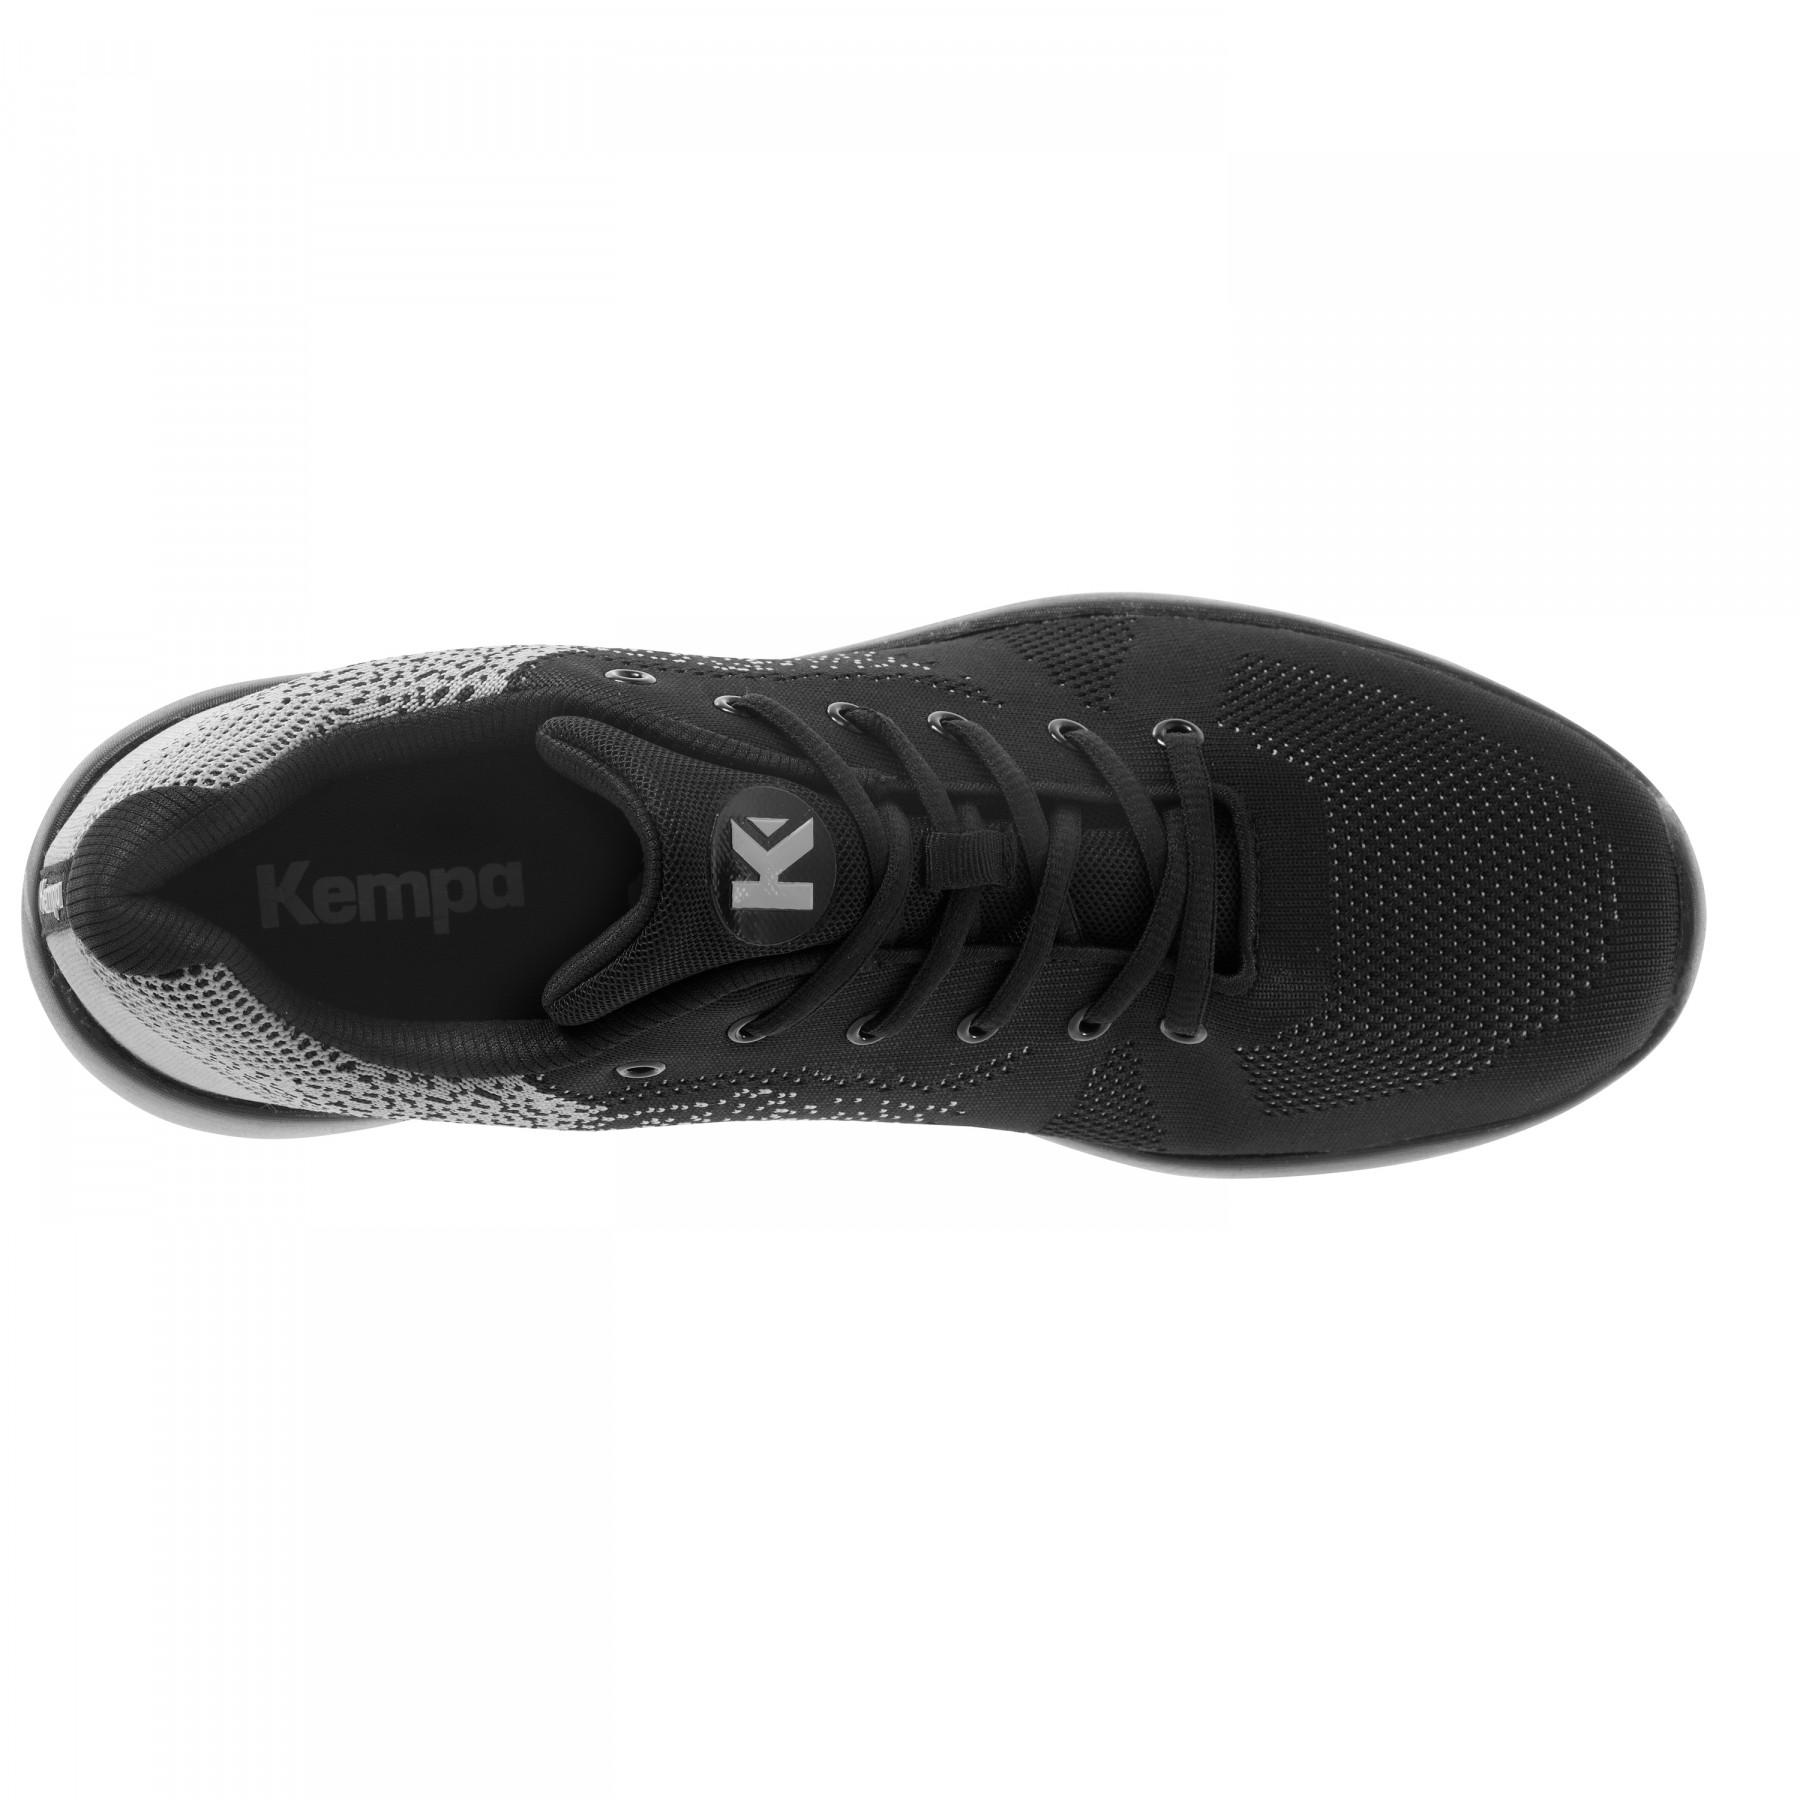 Schuhe Kempa K-Float